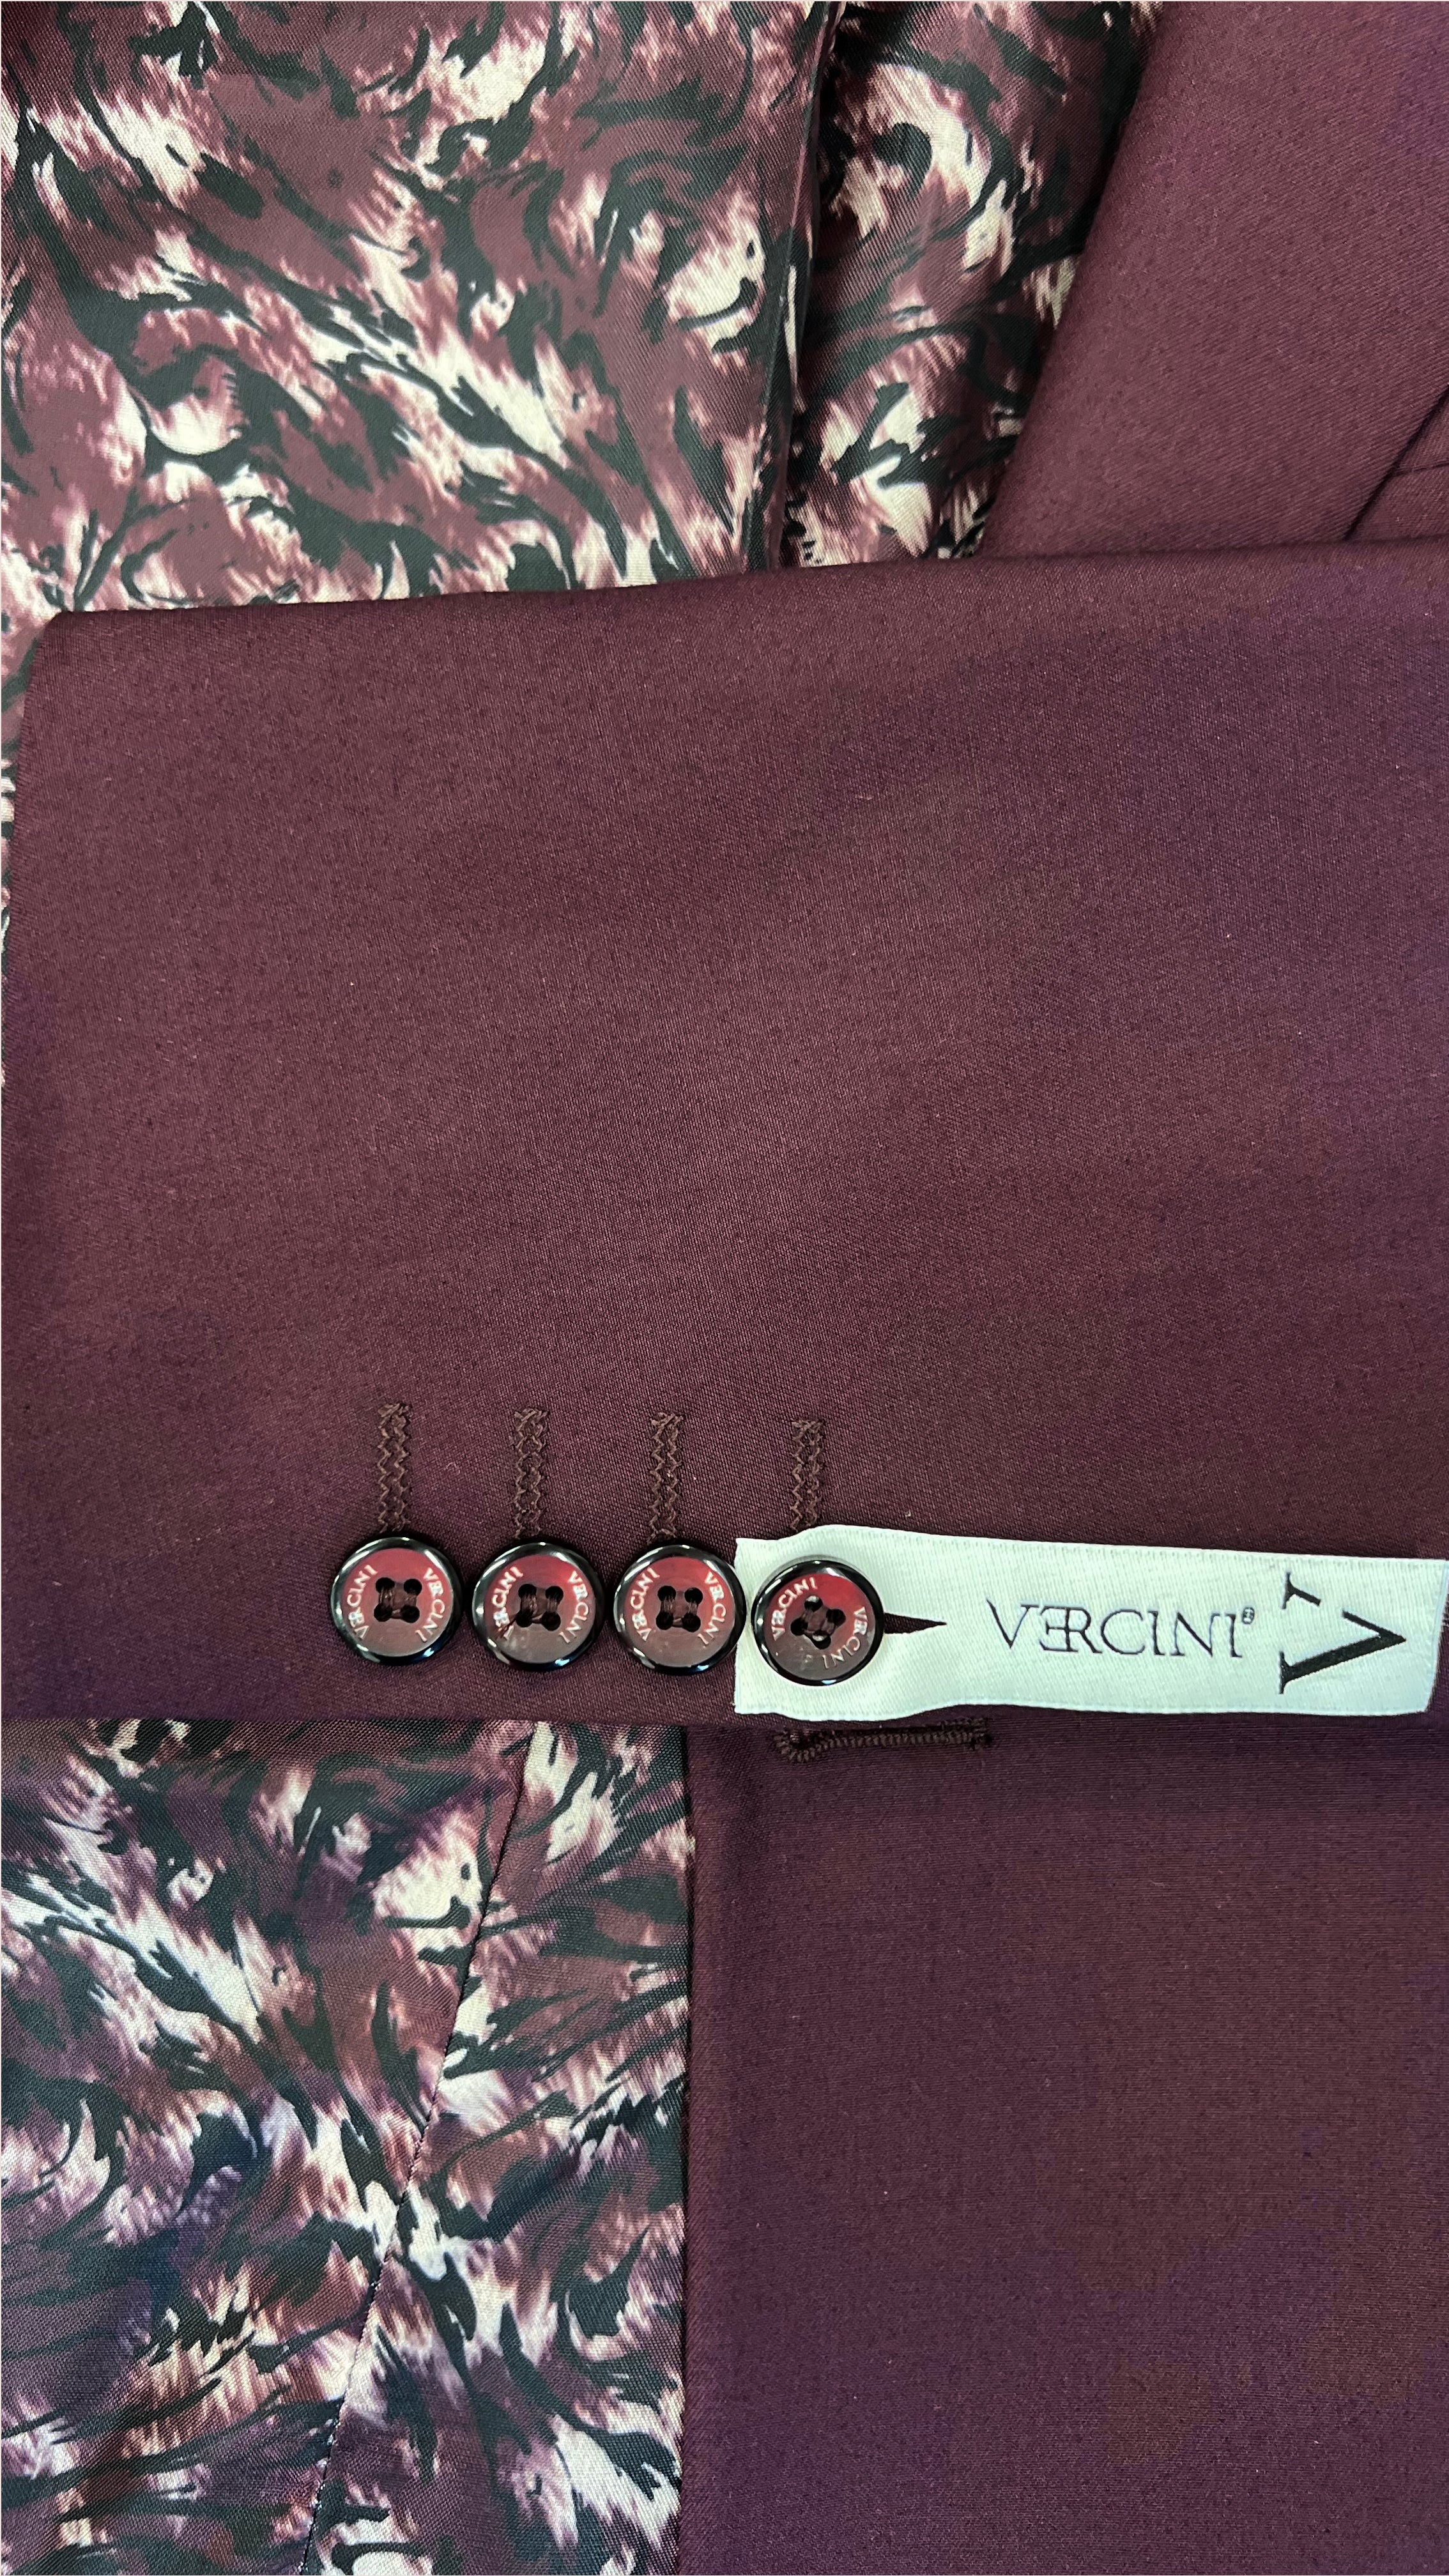 Vercini Premium Burgundy 3-Piece Men's Suit with Patterned Lining